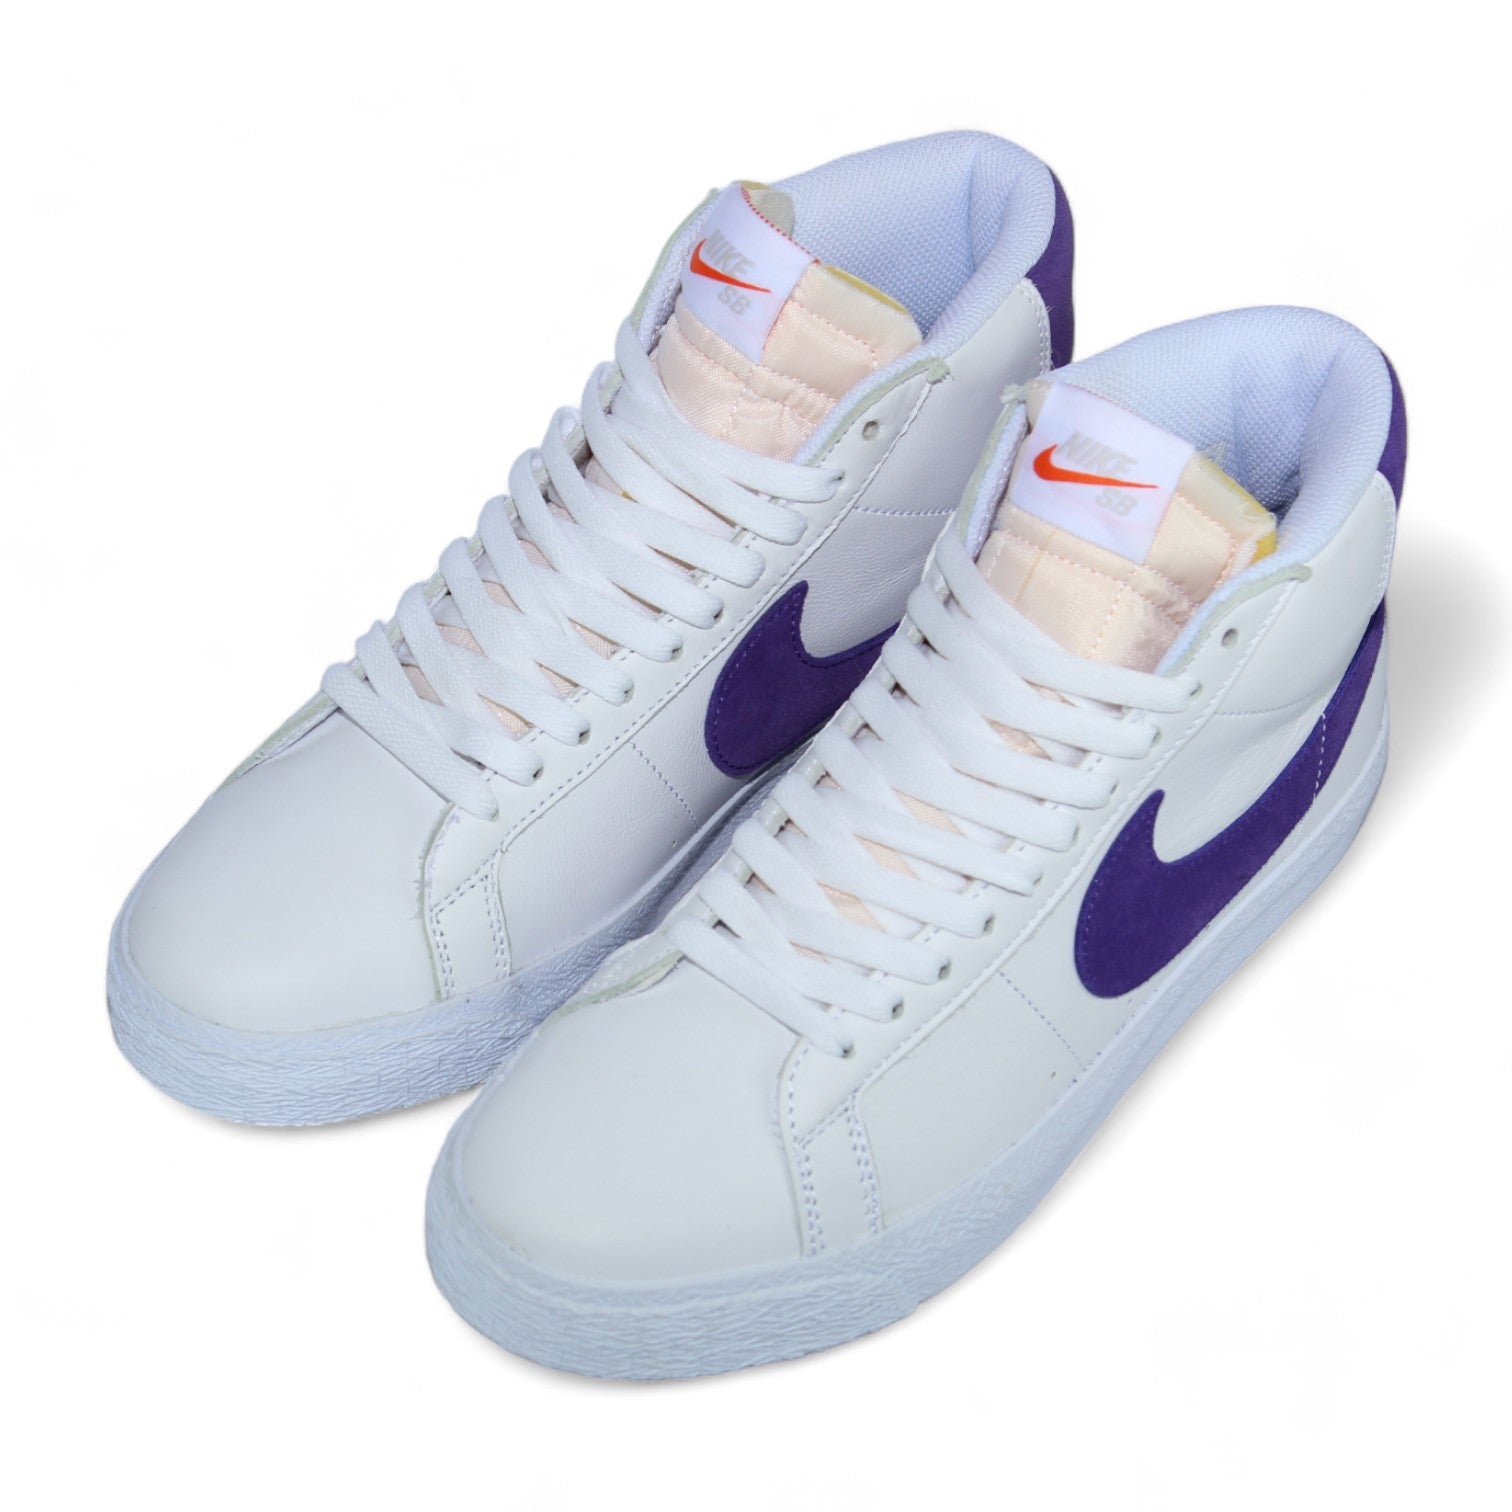 Nike SB Blazer Mid ISO - White/Court Purple